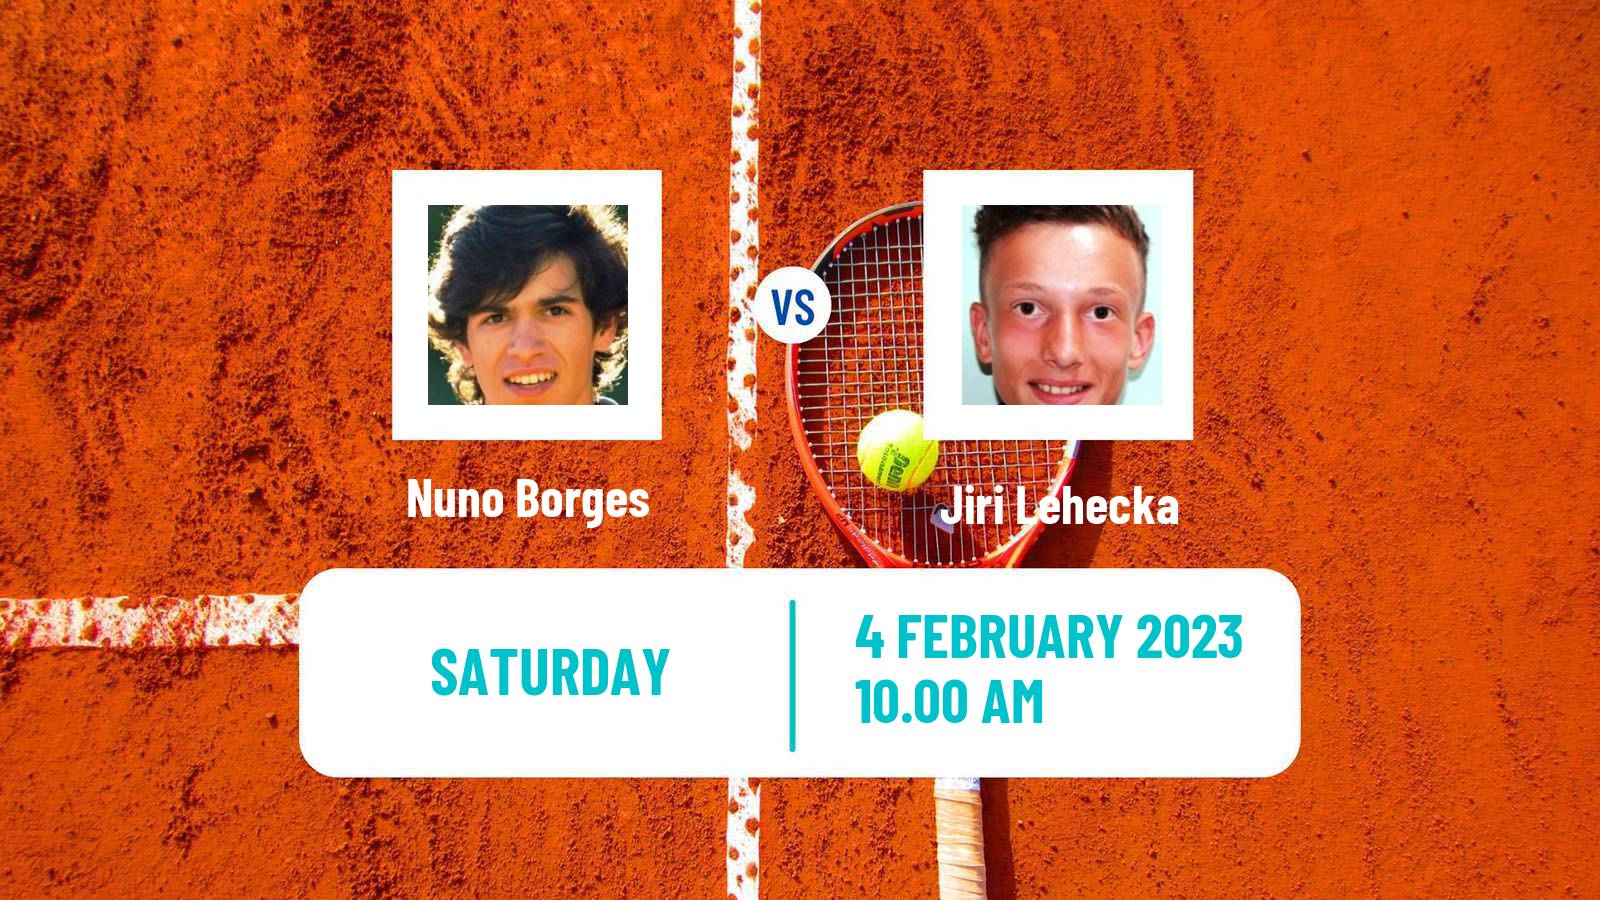 Tennis Davis Cup World Group Nuno Borges - Jiri Lehecka